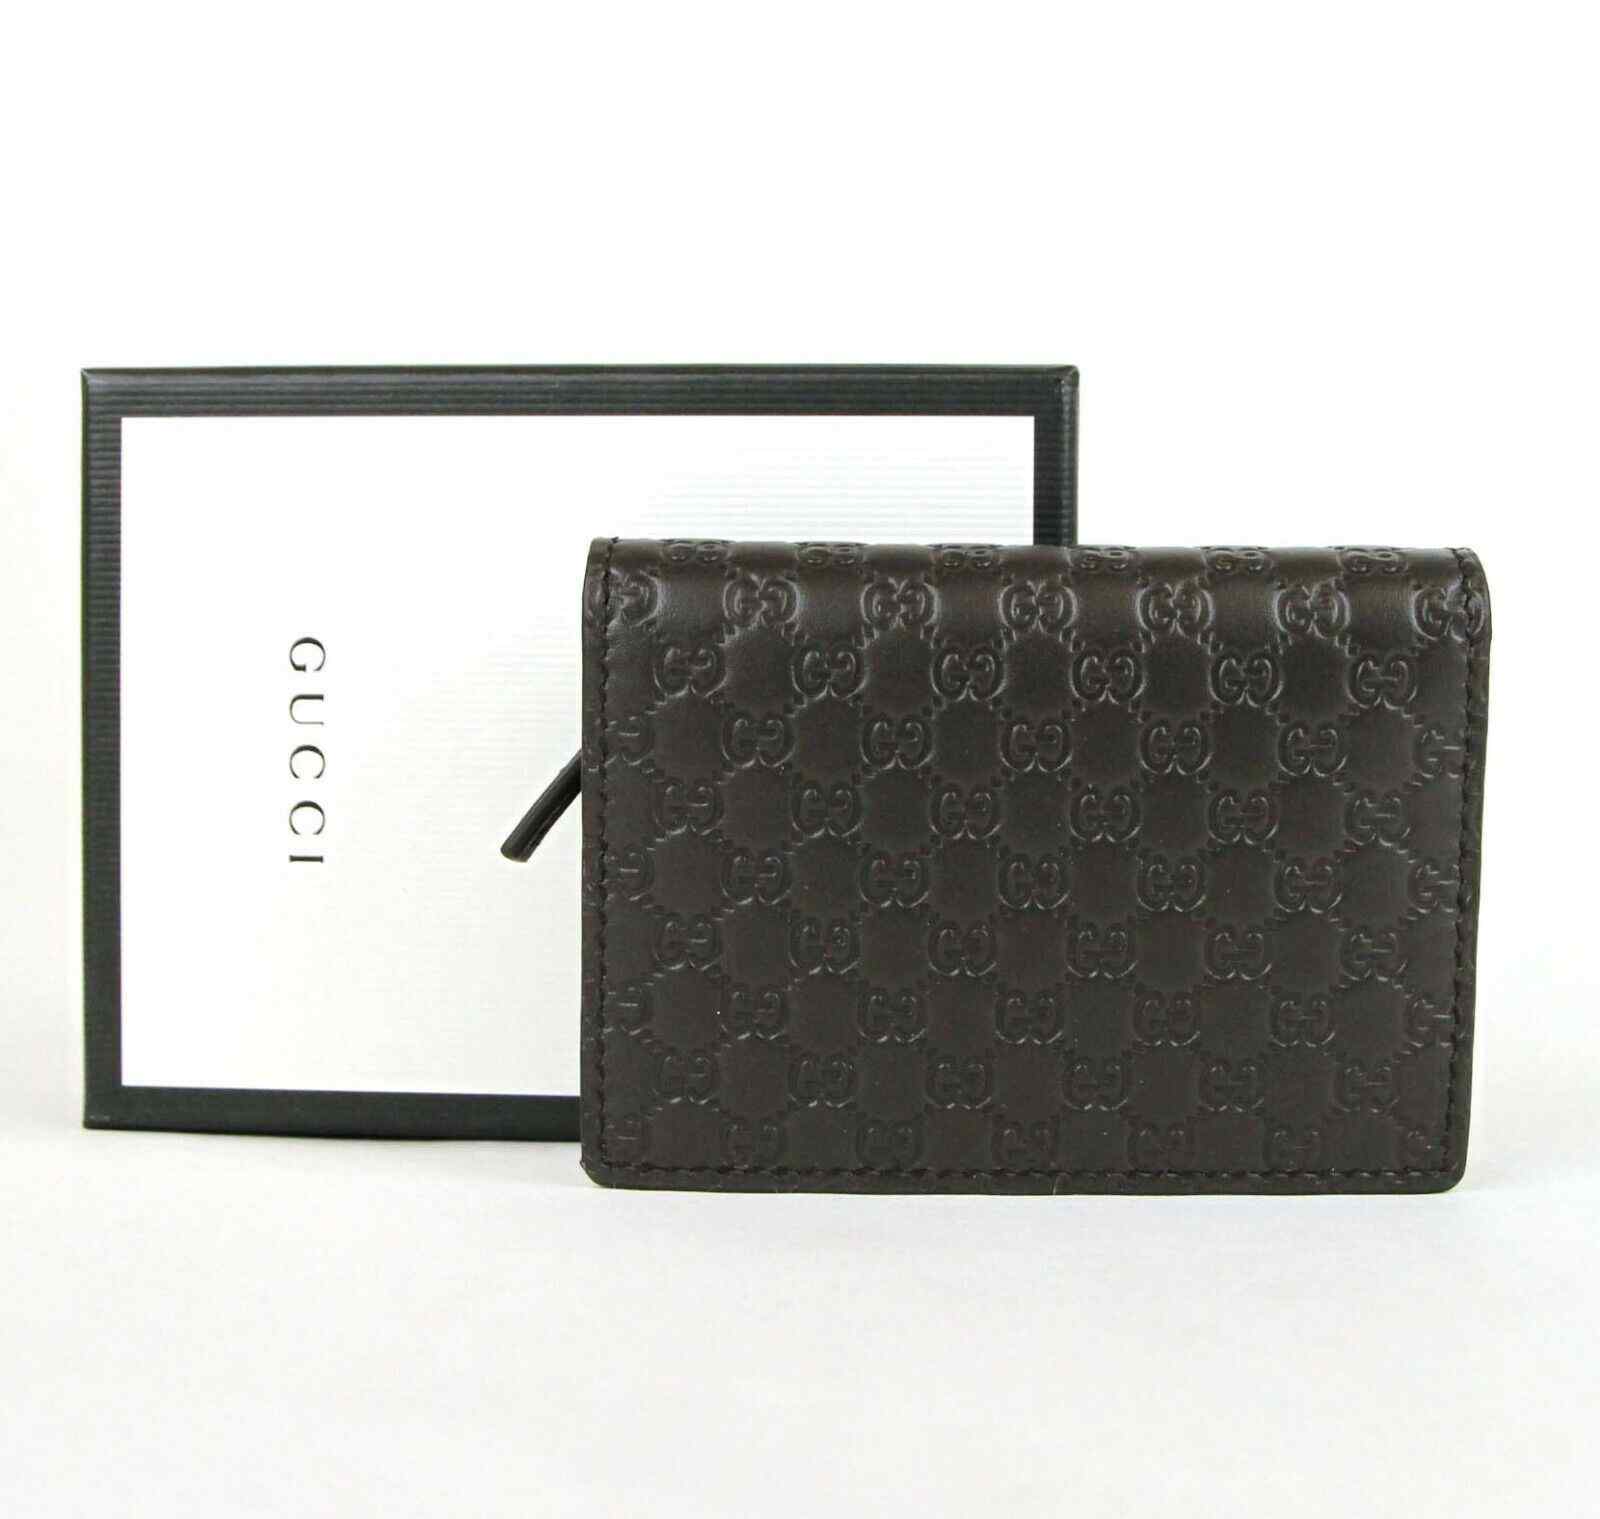 Black Jumbo-GG leather bi-fold cardholder, Gucci